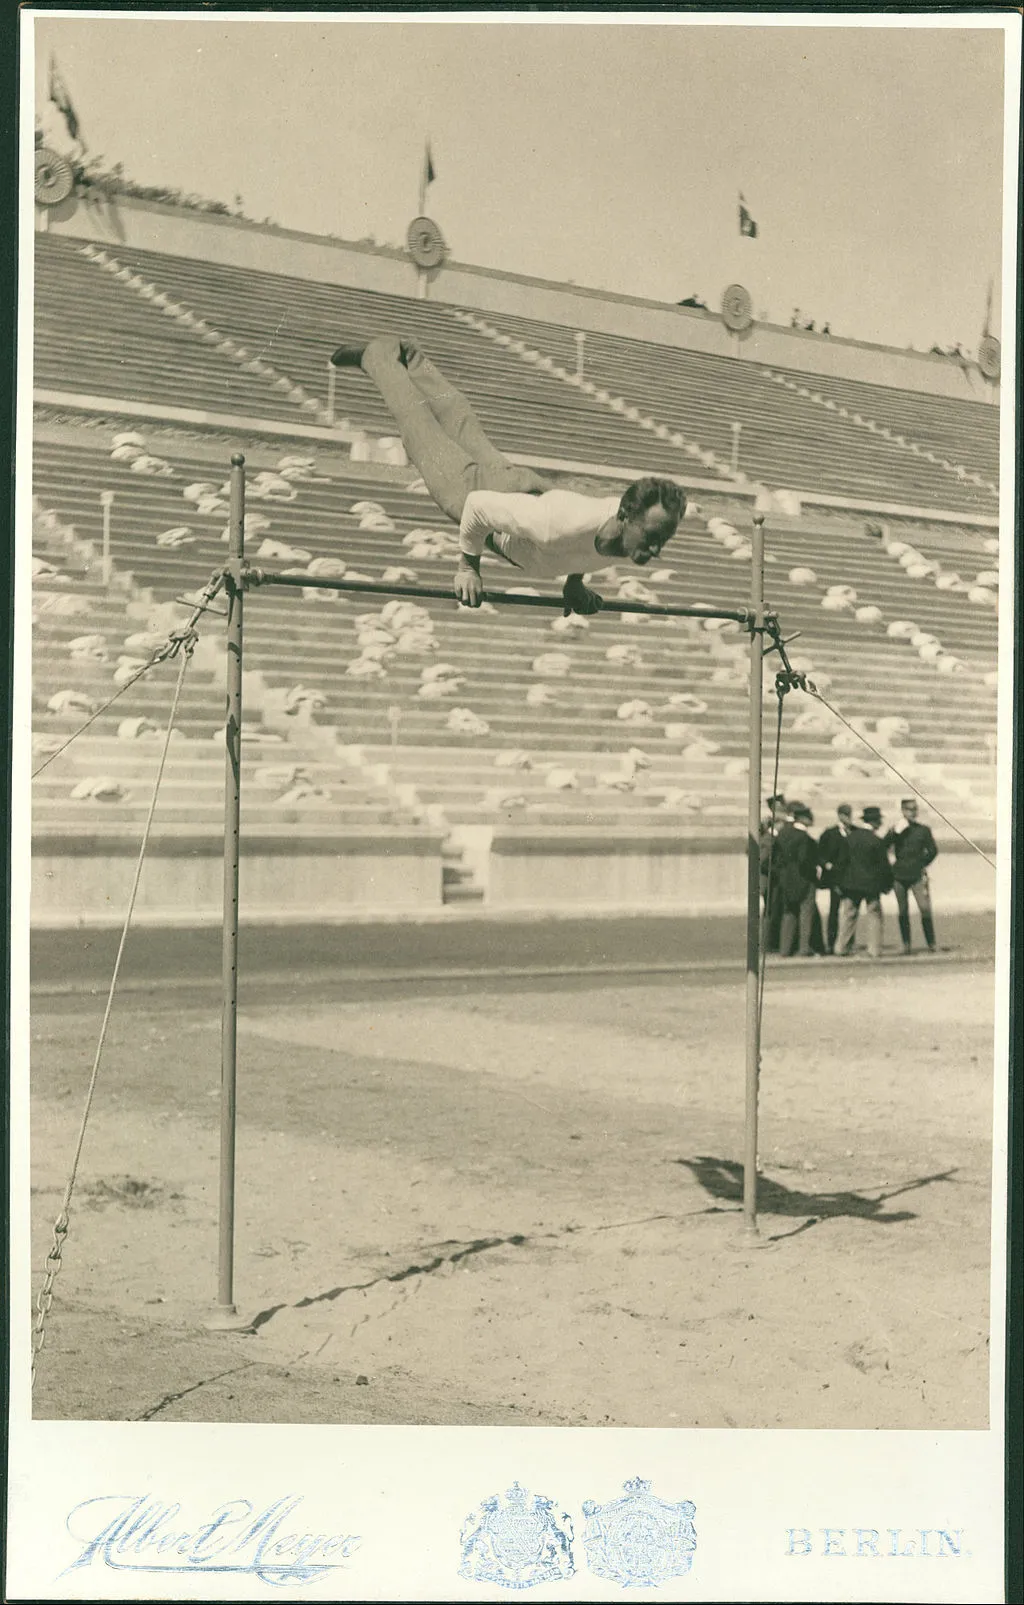 German athlete Herman Weingartner, horizontal bar champion, performing at the 1896 Olympics